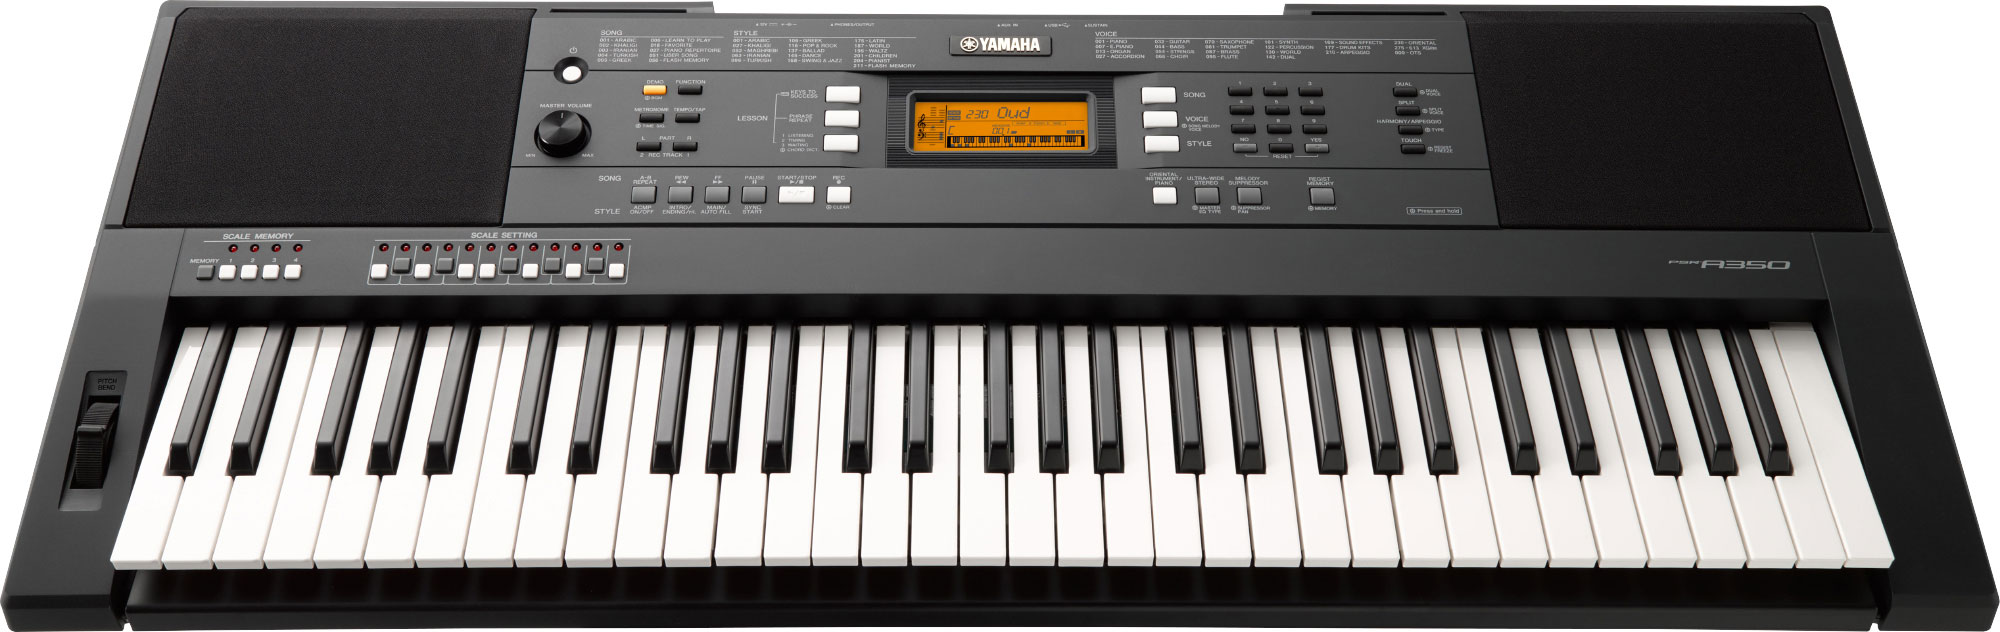 Yamaha Psr-a350 - Clavier Arrangeur - Variation 2